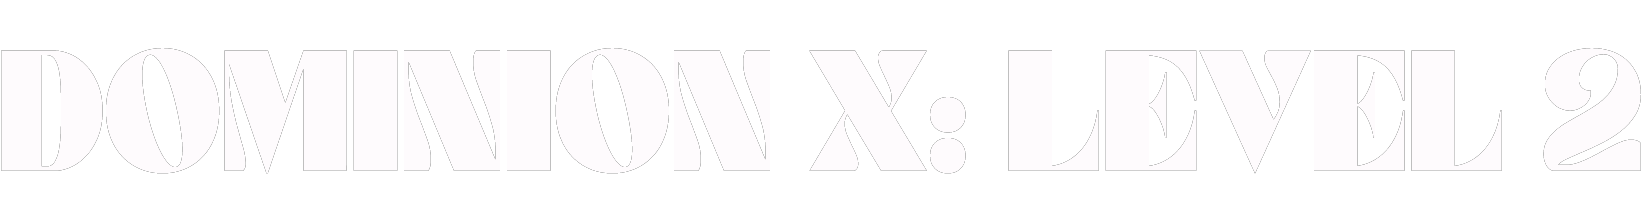 Dominion X logo